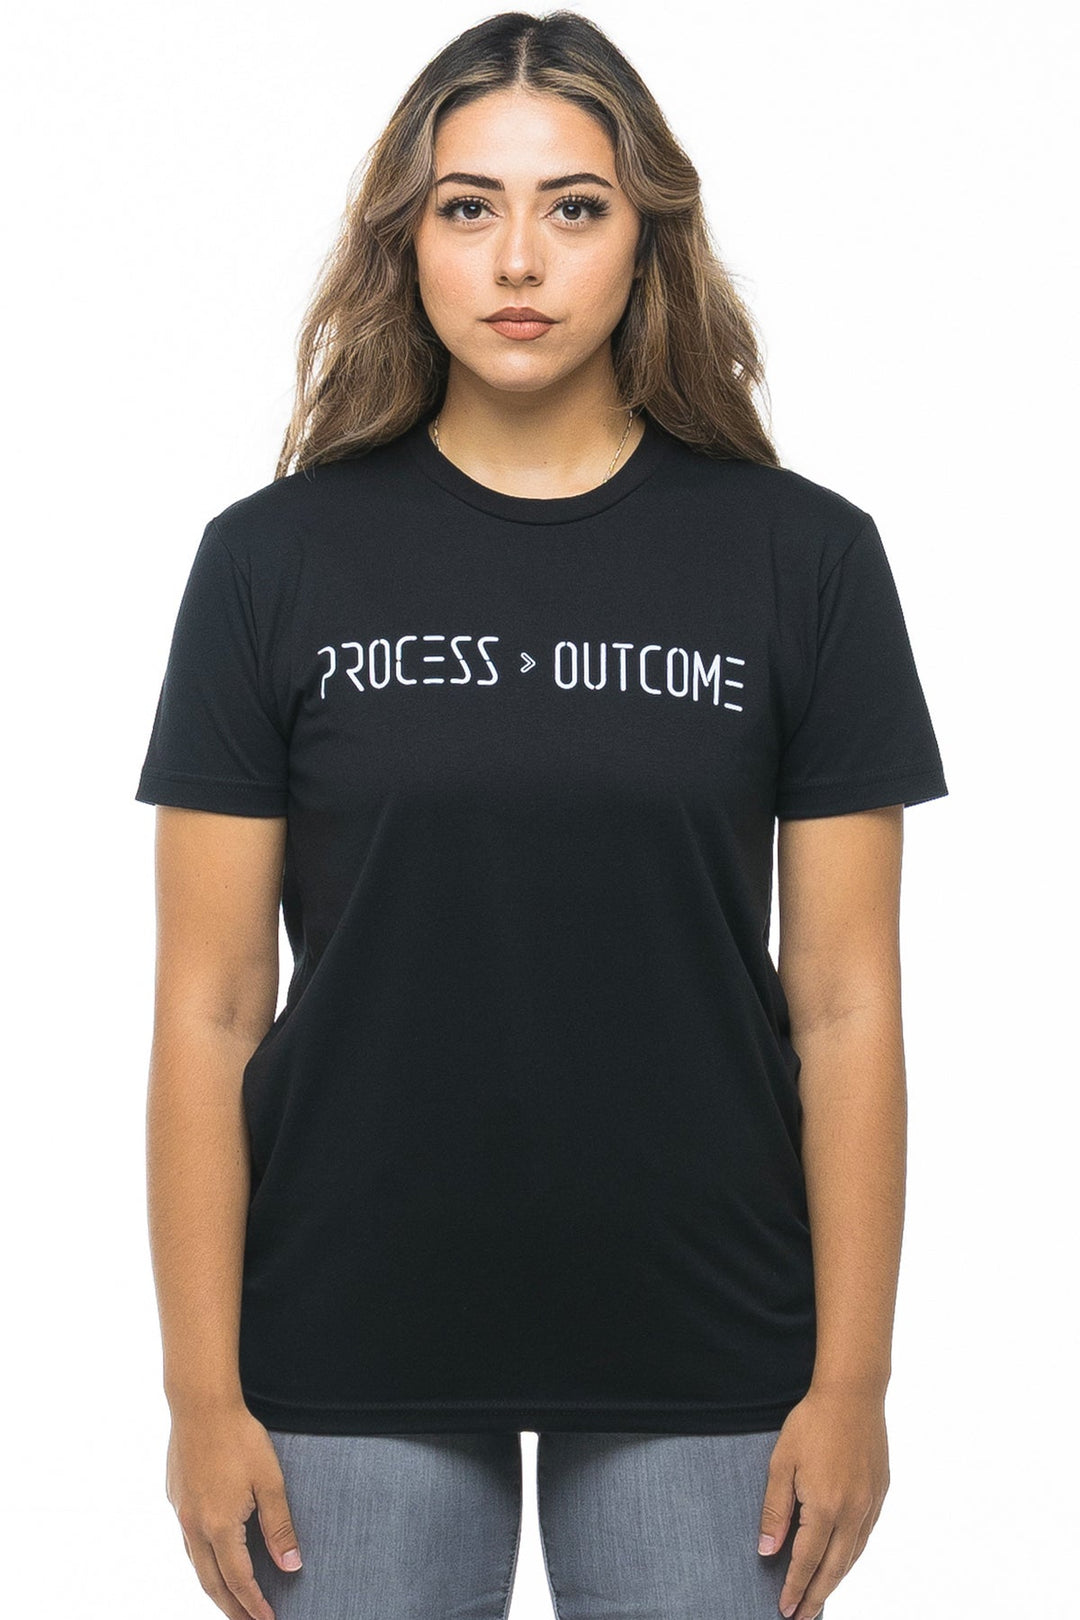 Process > Outcome - Unisex